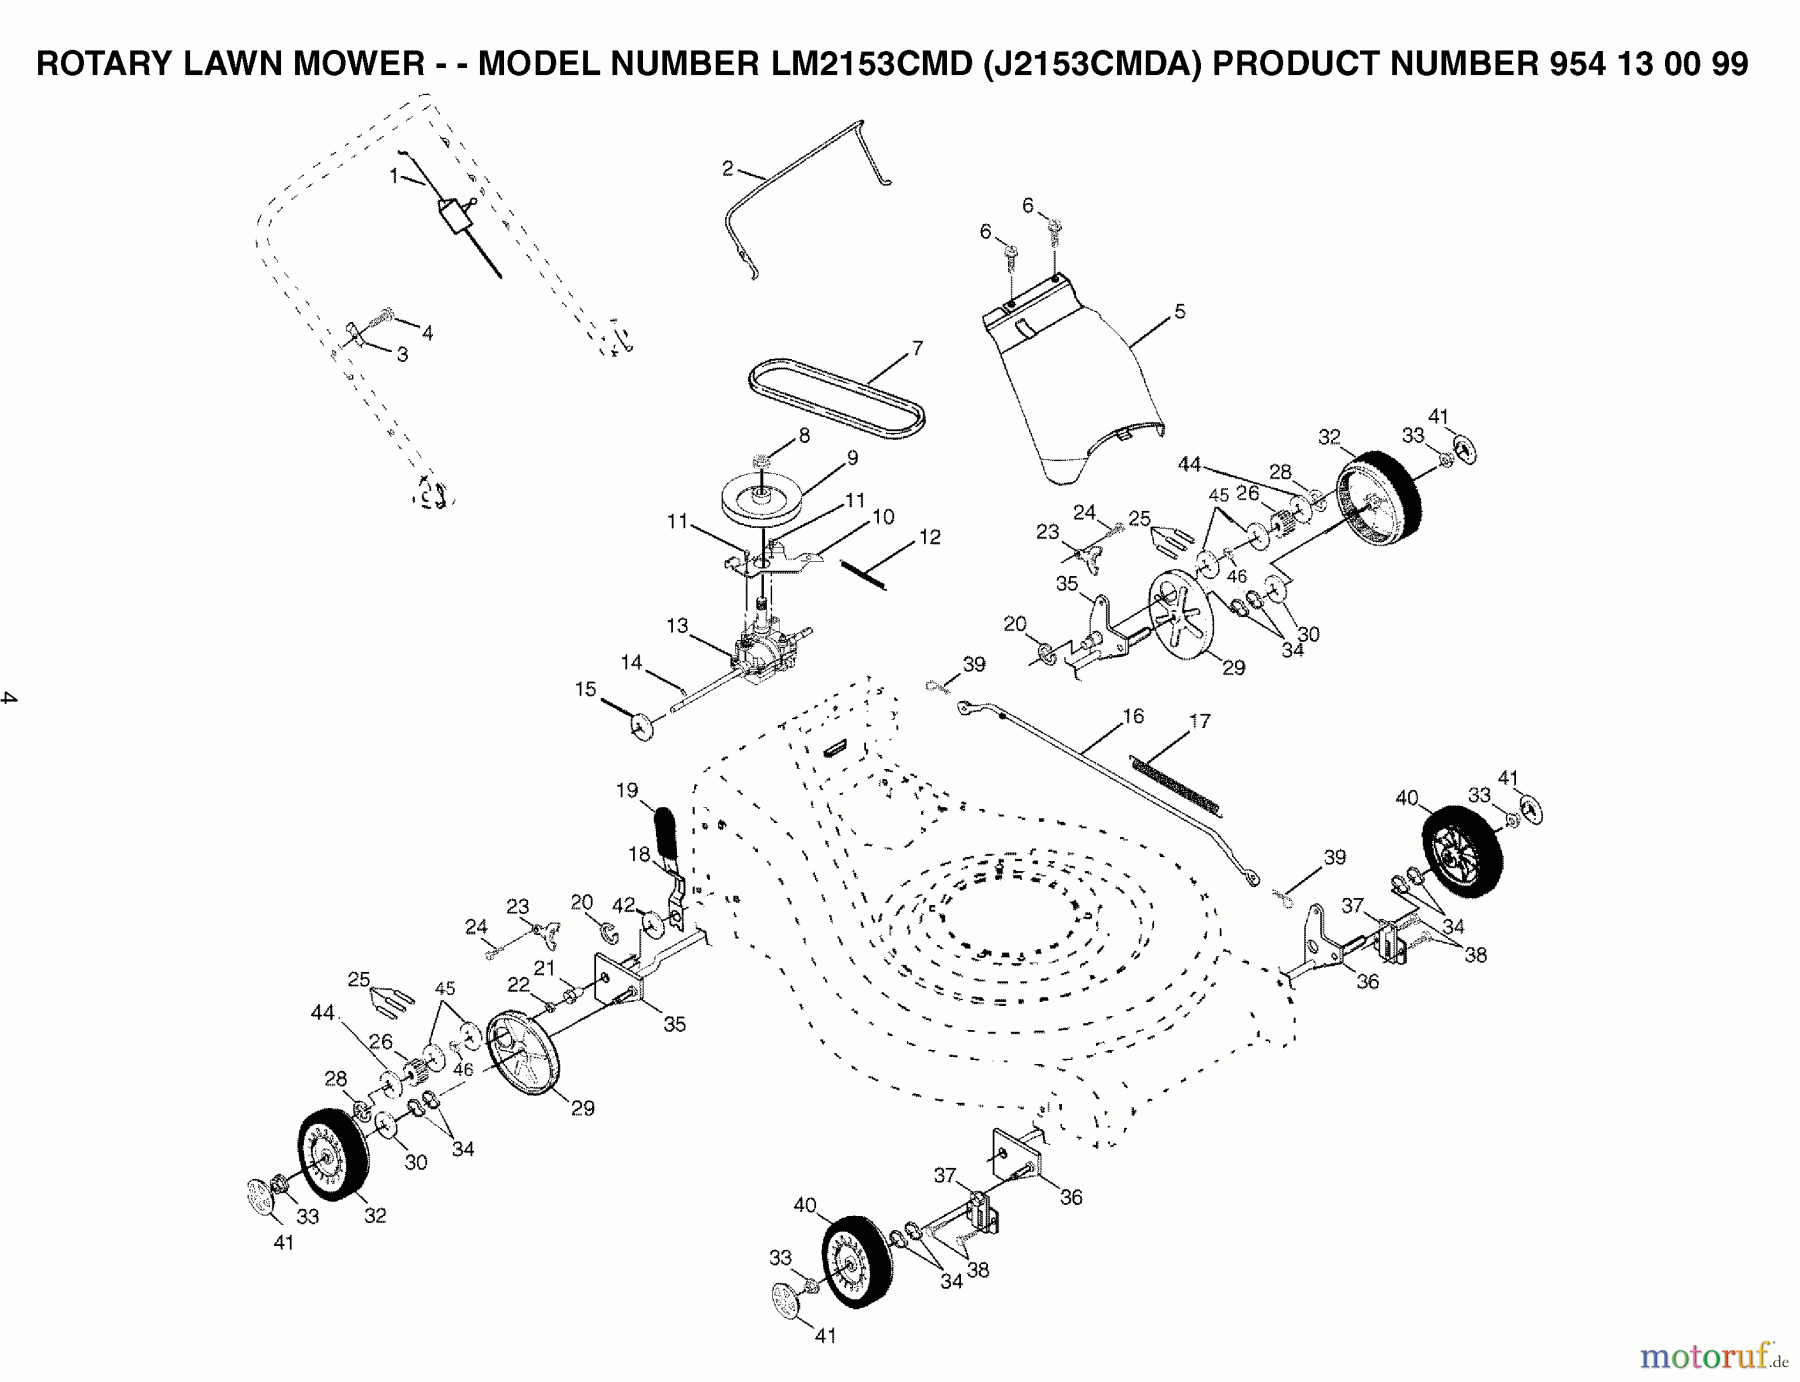  Jonsered Rasenmäher LM2153CMD (J2153CMDA, 954130099) - Jonsered Walk-Behind Mower (2003-01) PRODUCT COMPLETE #1